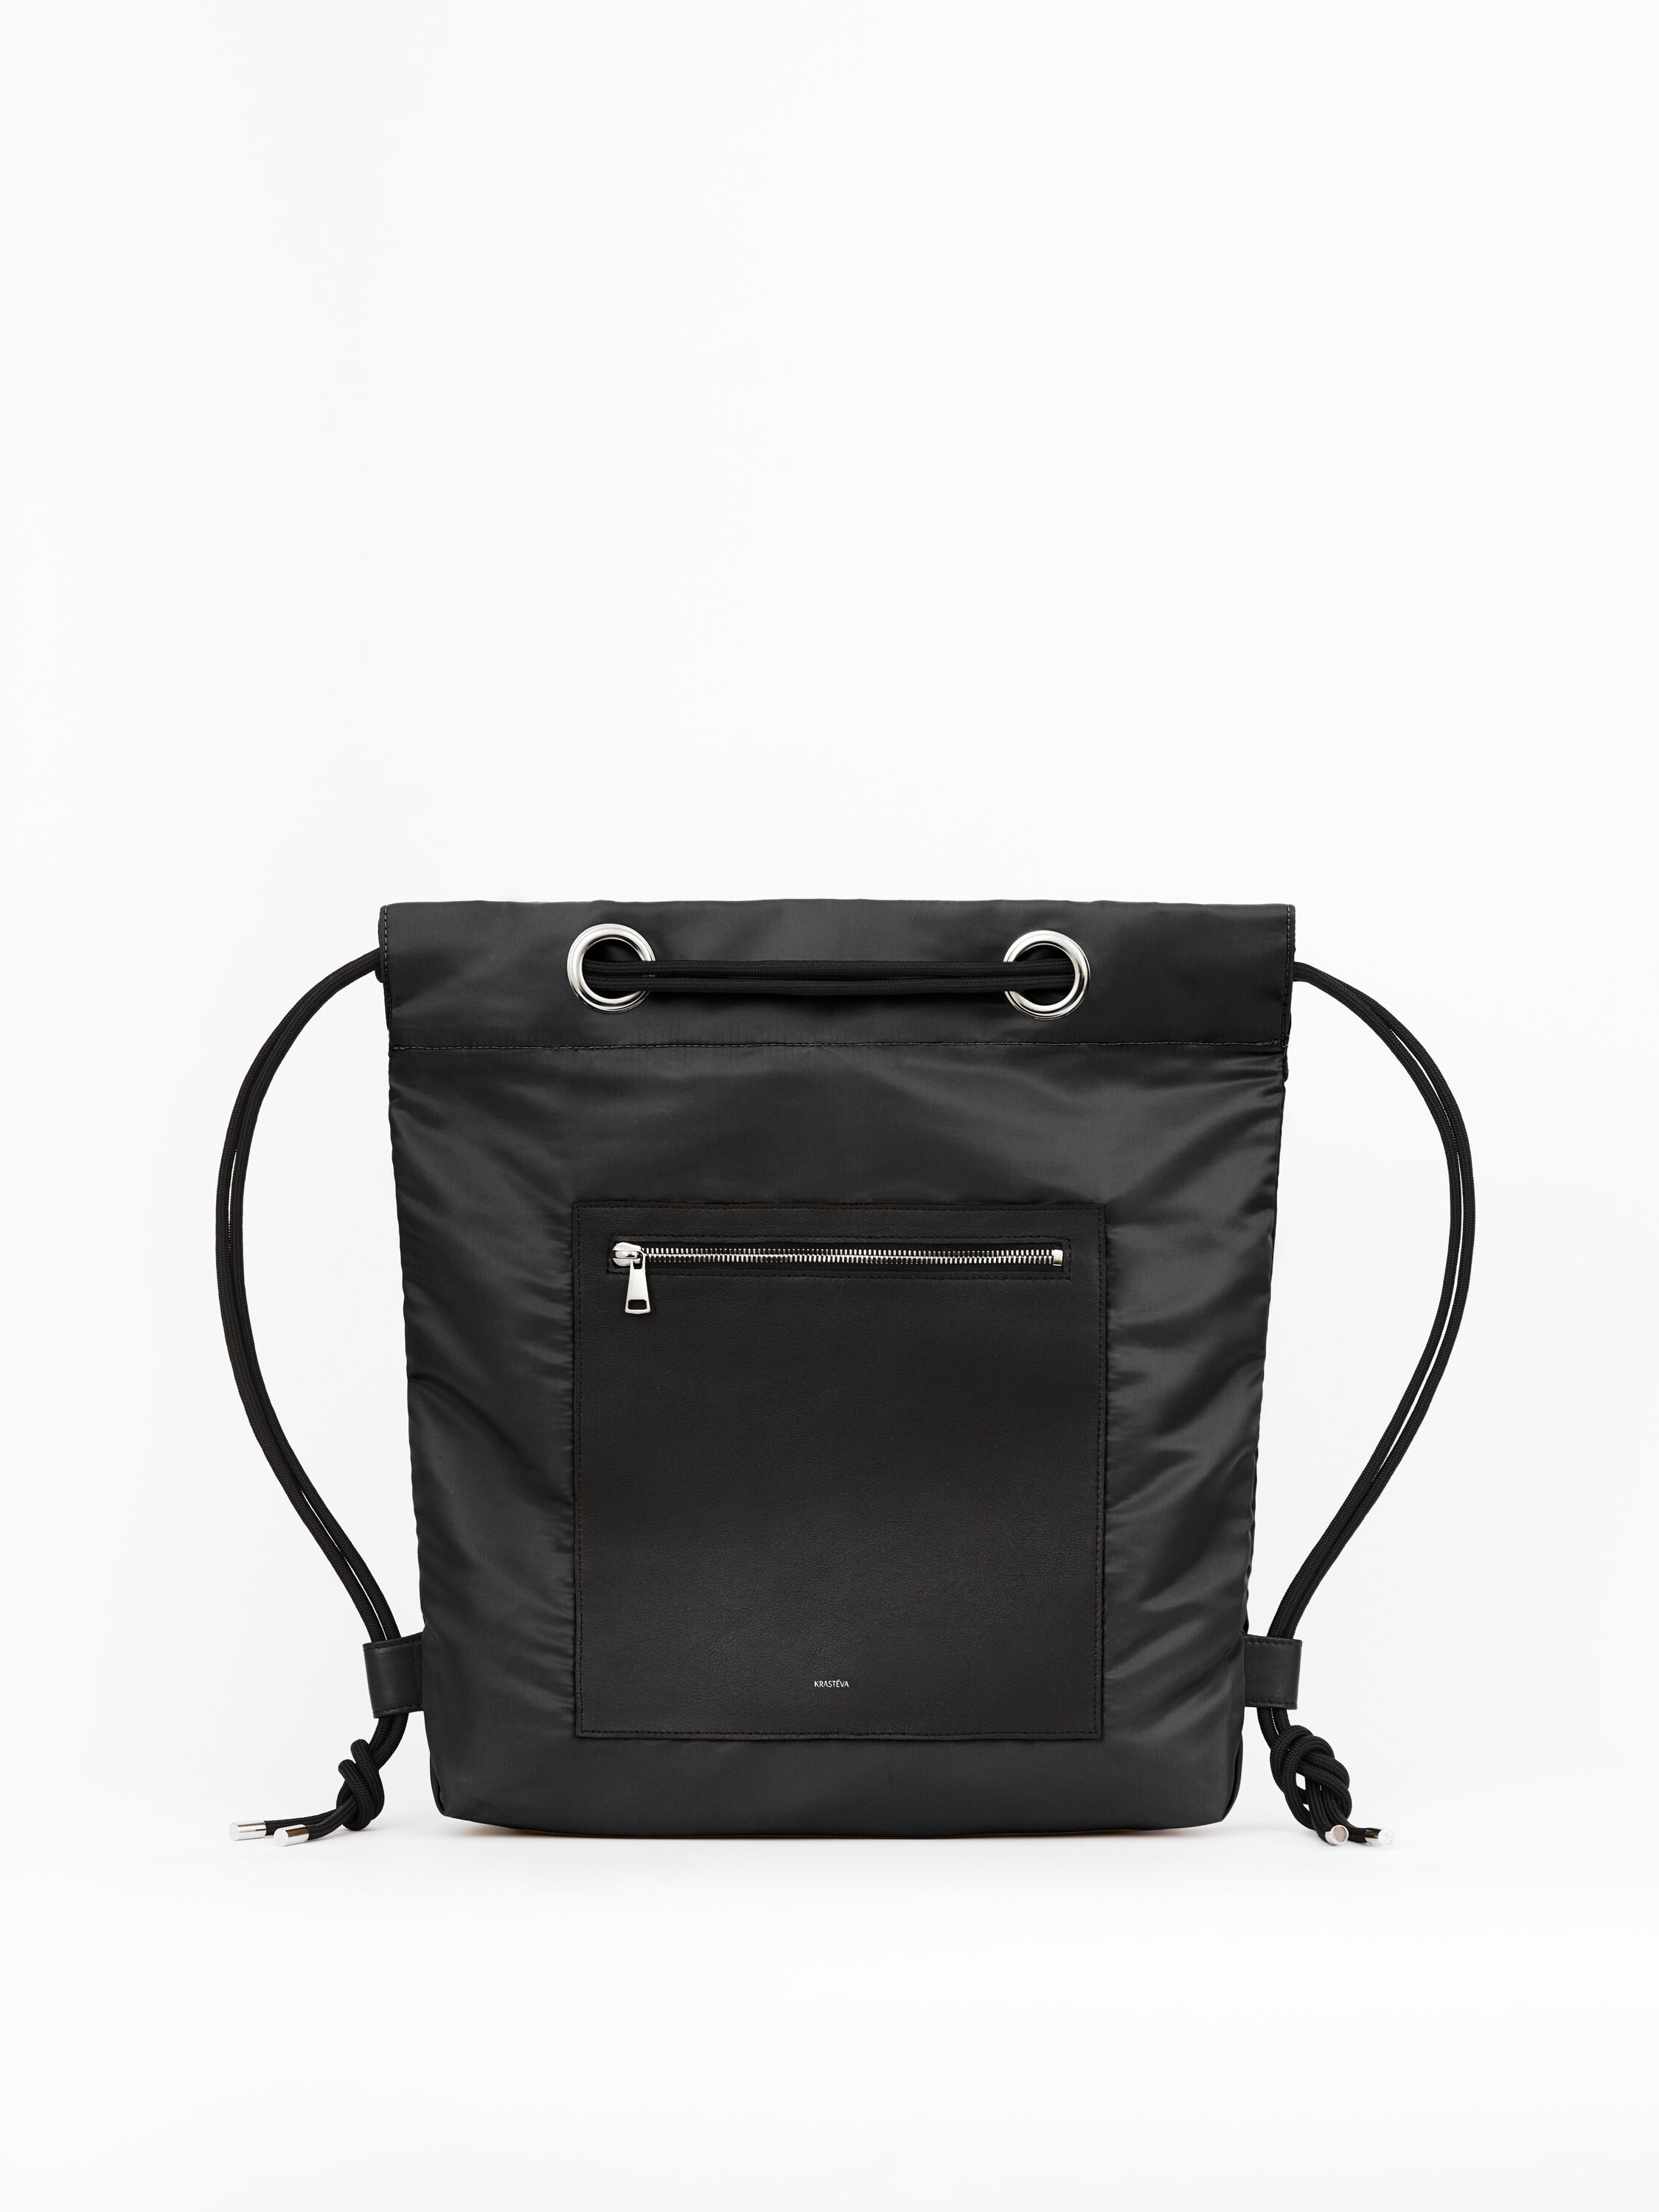 Olive Green Drawstring Bag Convertible Backpack Purse | Etsy